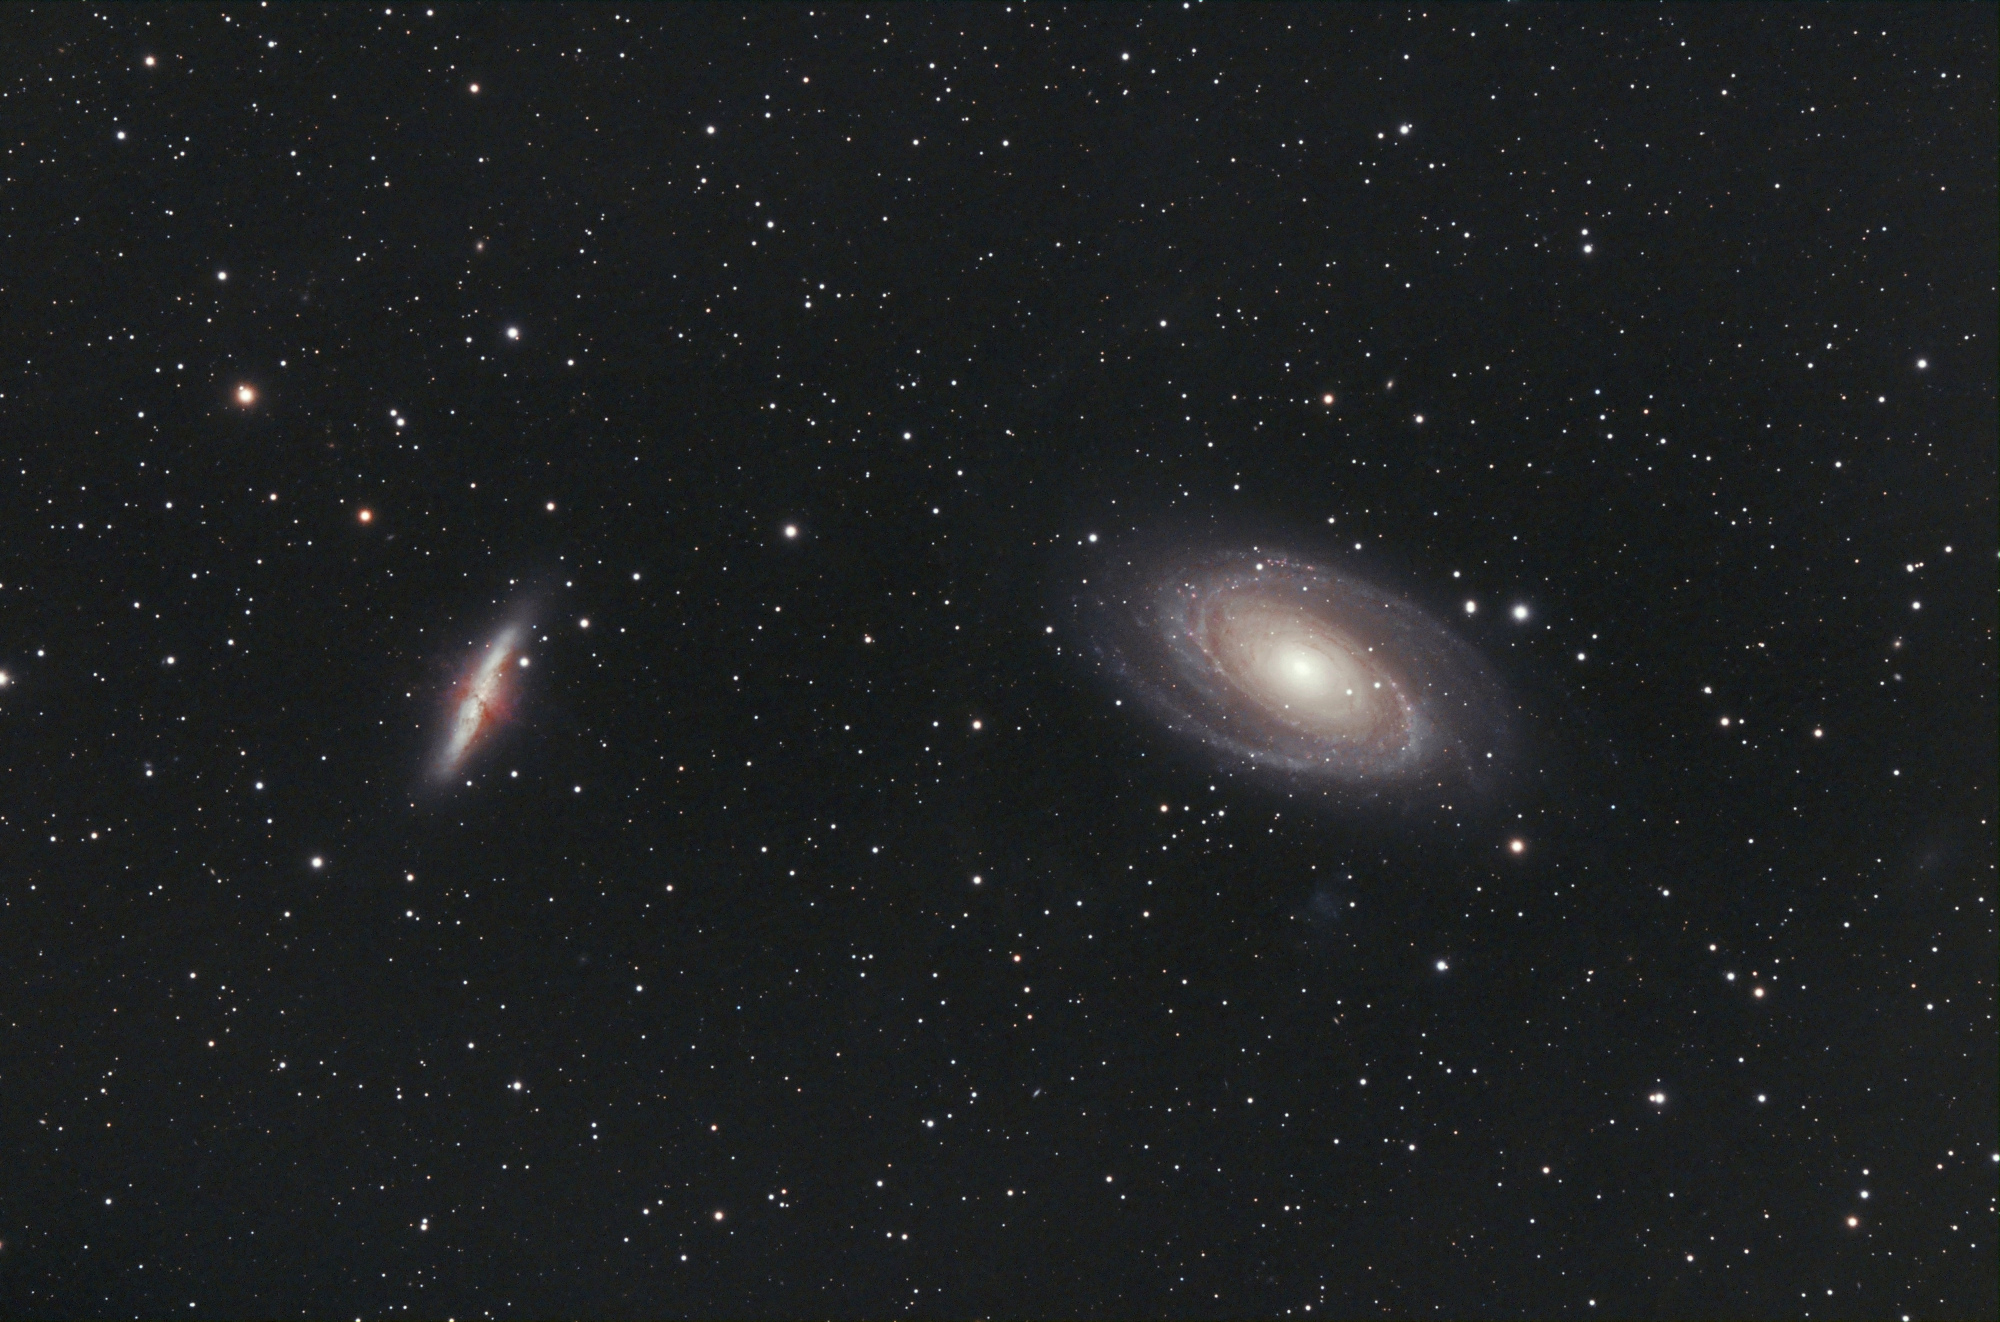 M81_&_M82_SIRIL-1-cs5-4-iris-2-FINAL-5.jpg